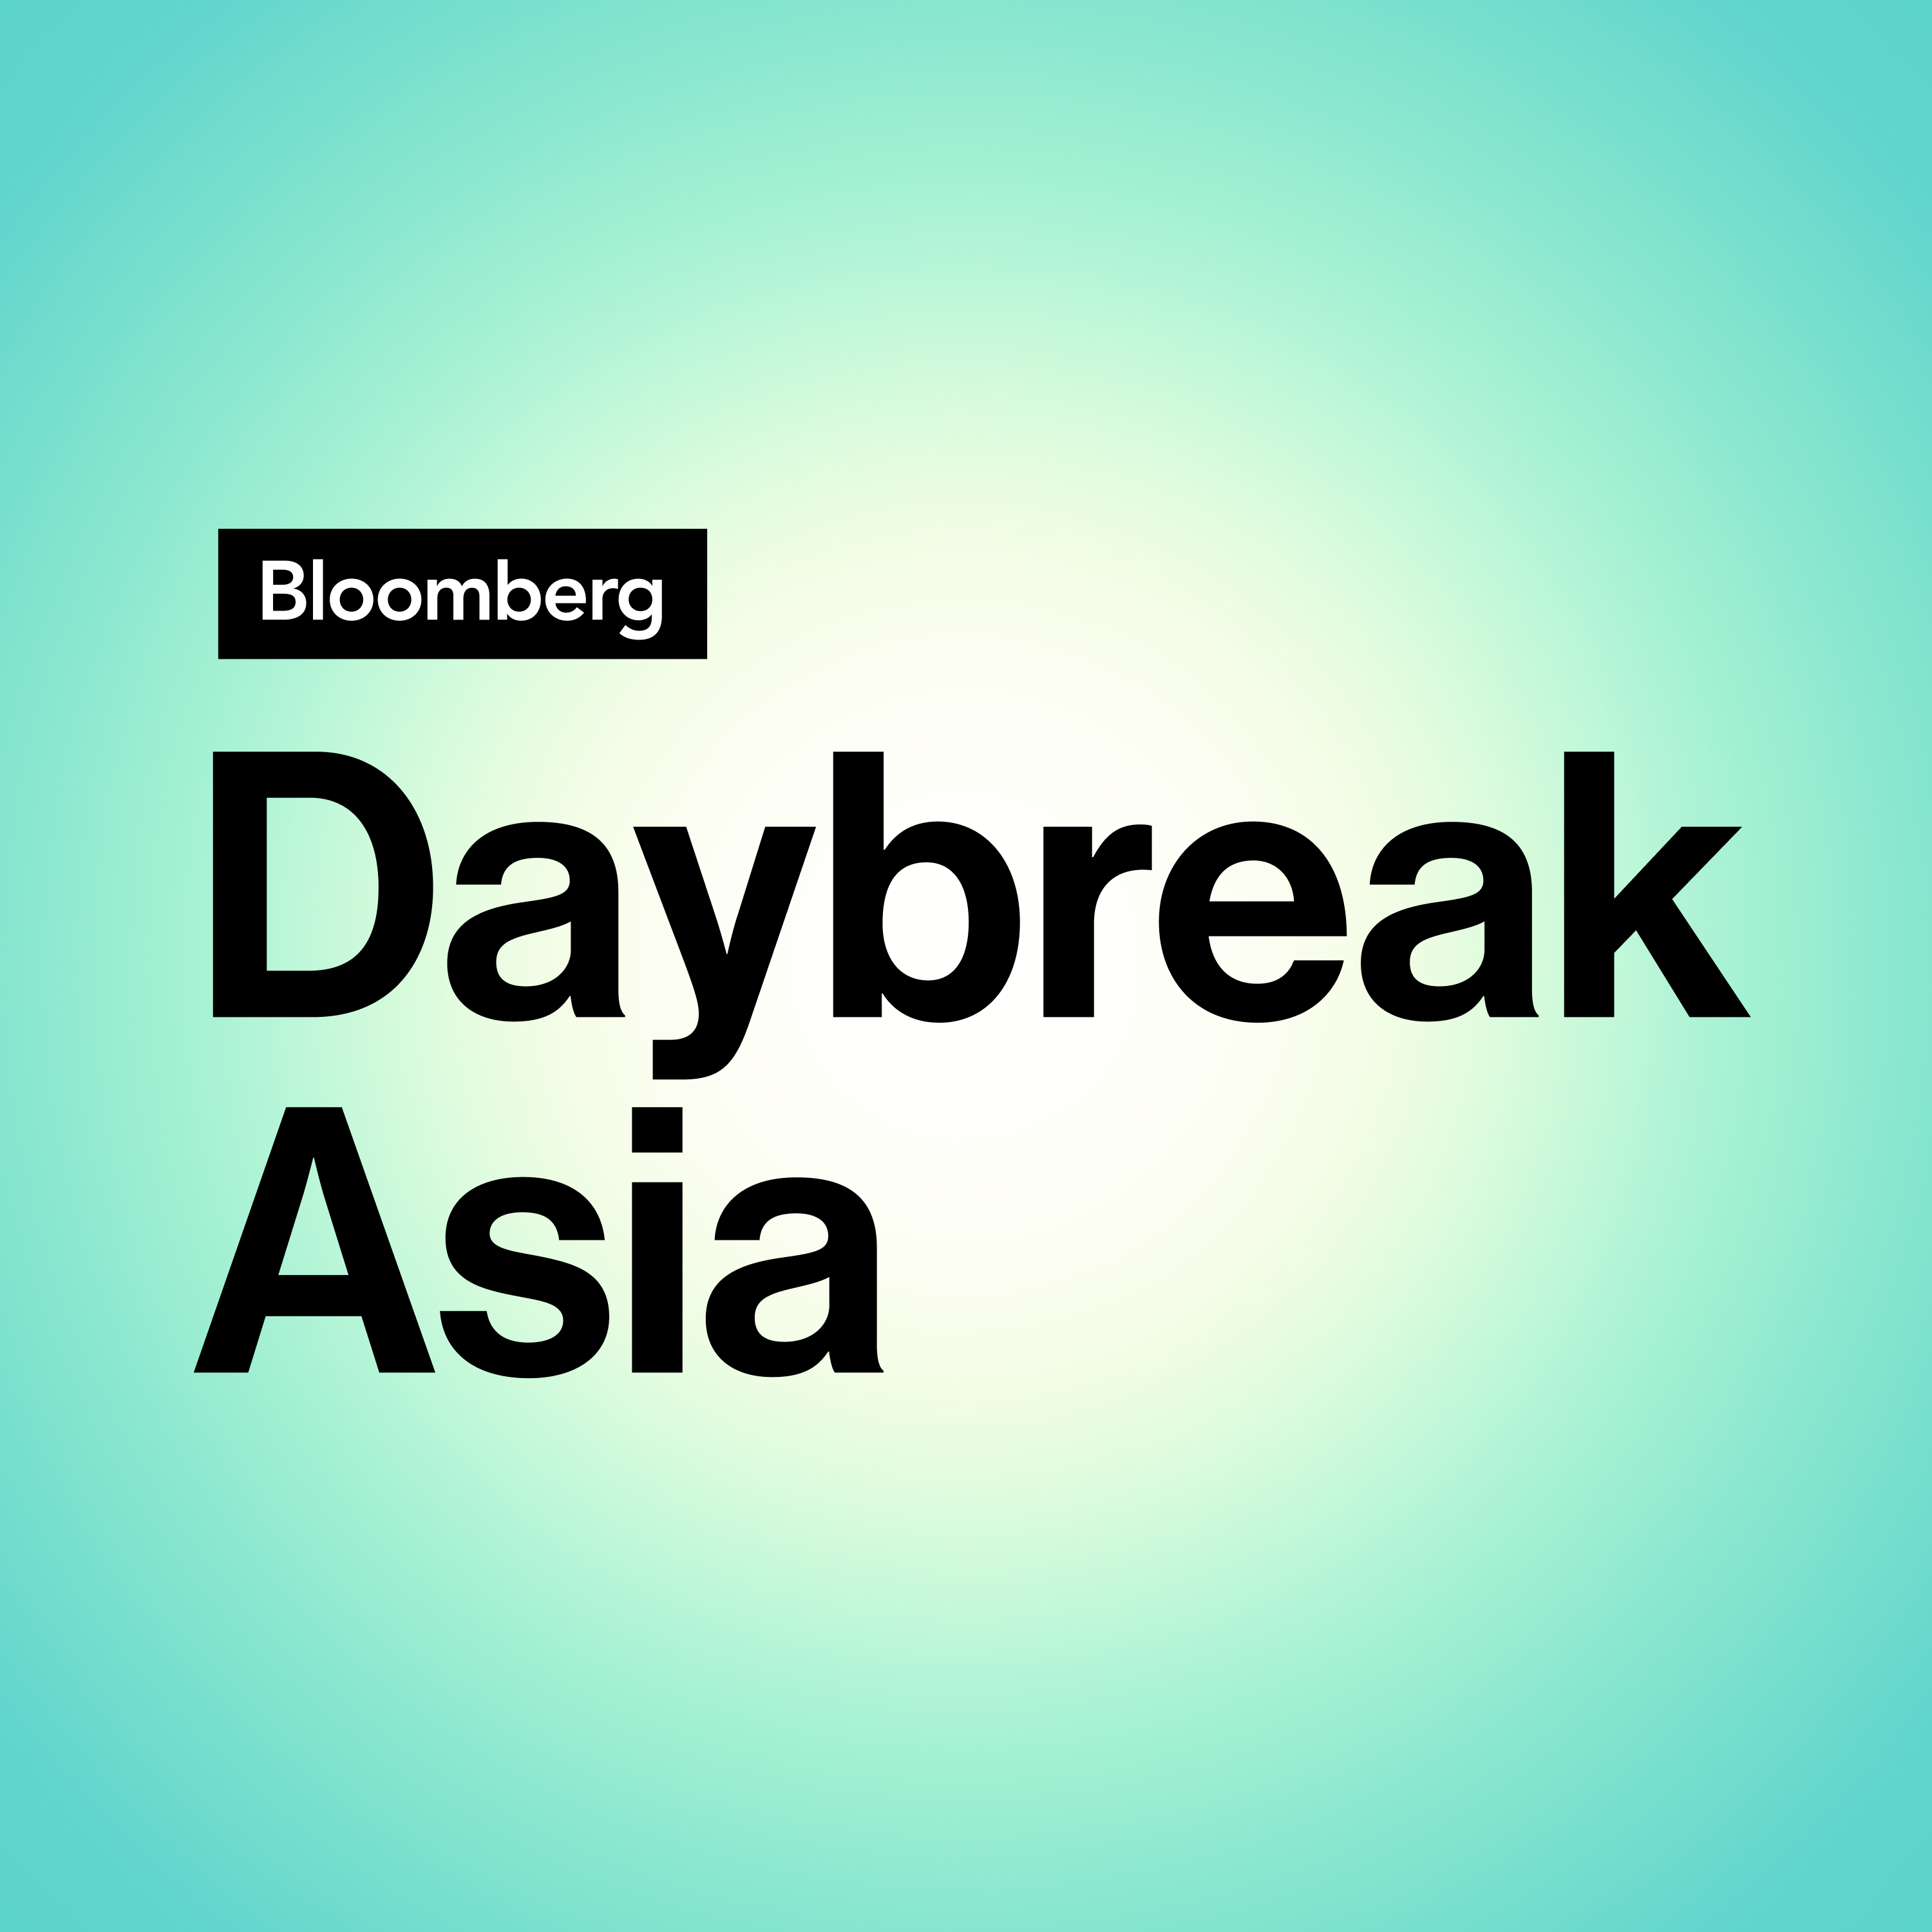 China's Taiwan Strait Drills, Asian Stocks Slide